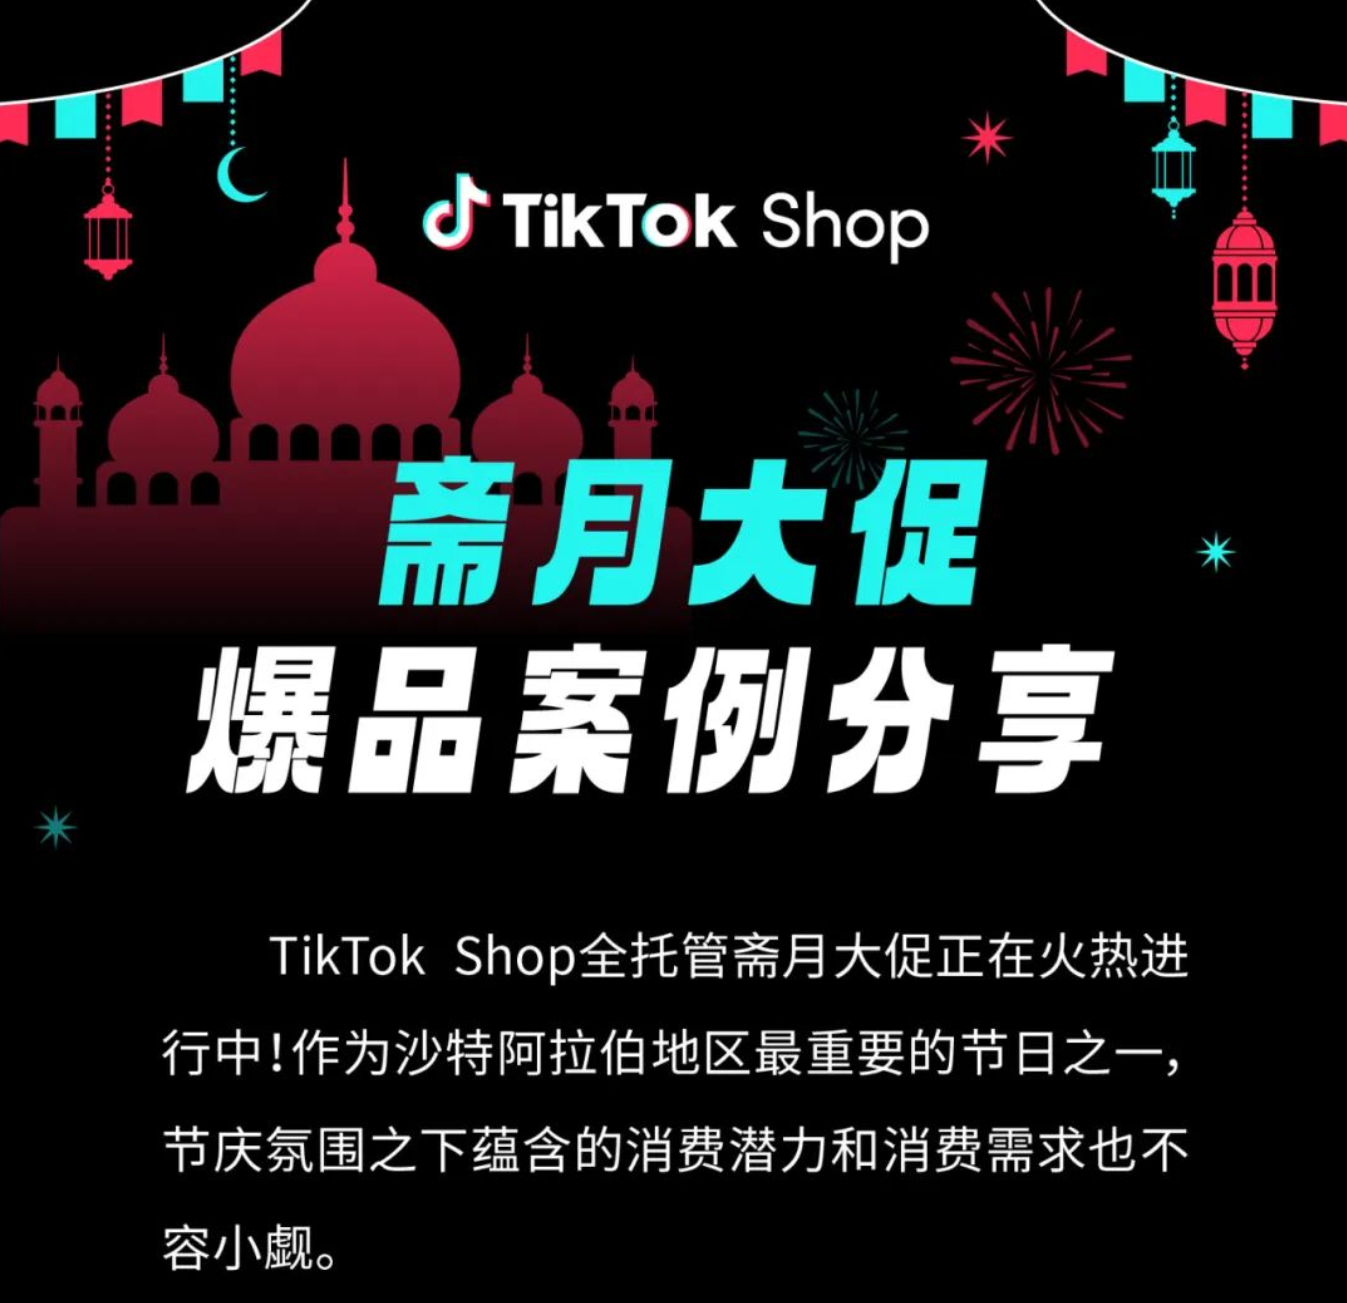 TikTok Shop沙特站：斋月节男士跑鞋曝光最高一天破百万